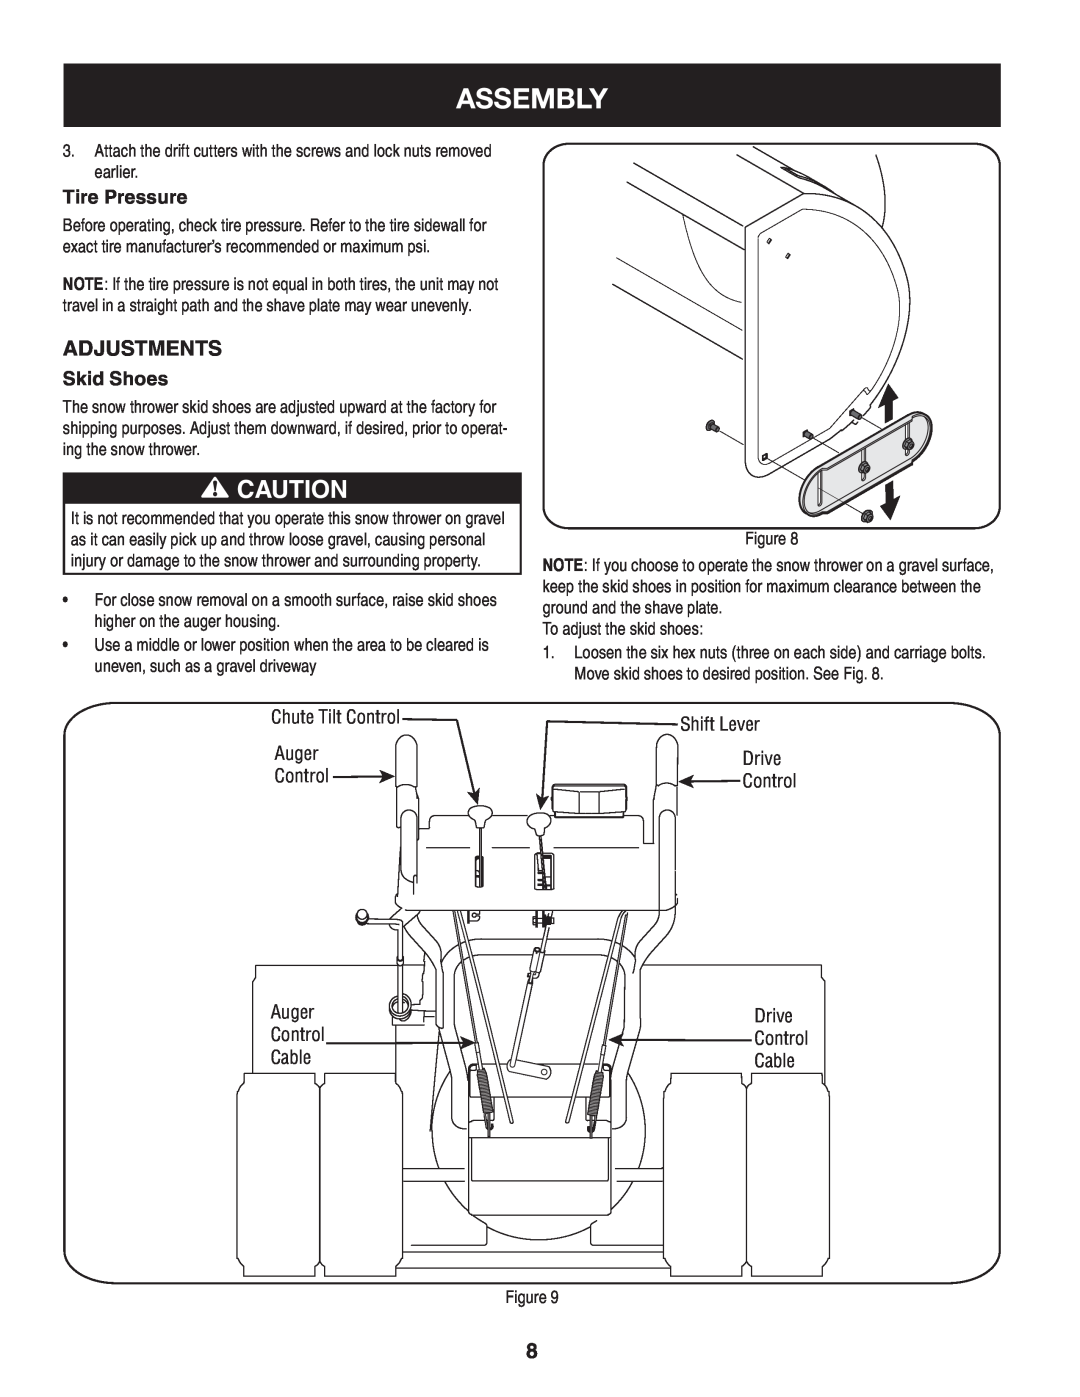 Craftsman 247.88045 manual Assembly, Adjustments, Tire Pressure, Skid Shoes 